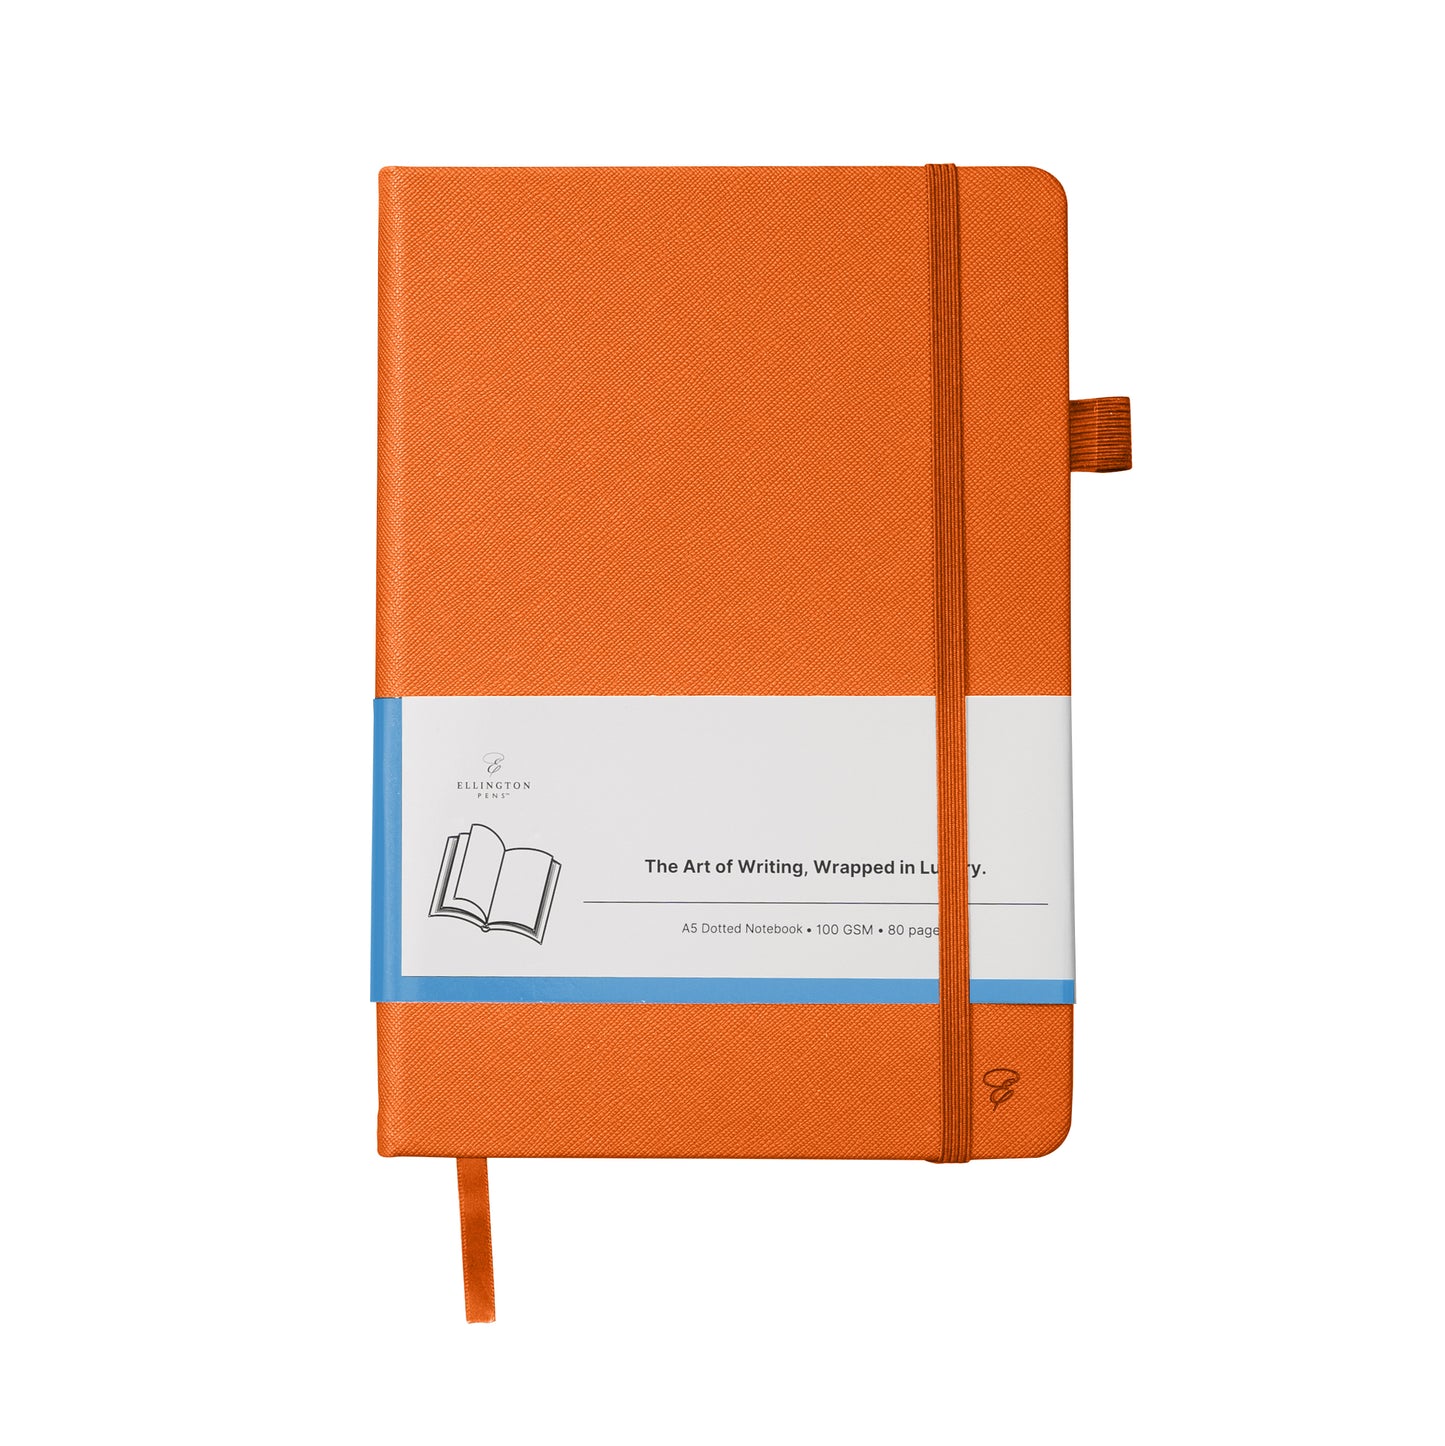 Orange Journal - PU Saffiano Leather